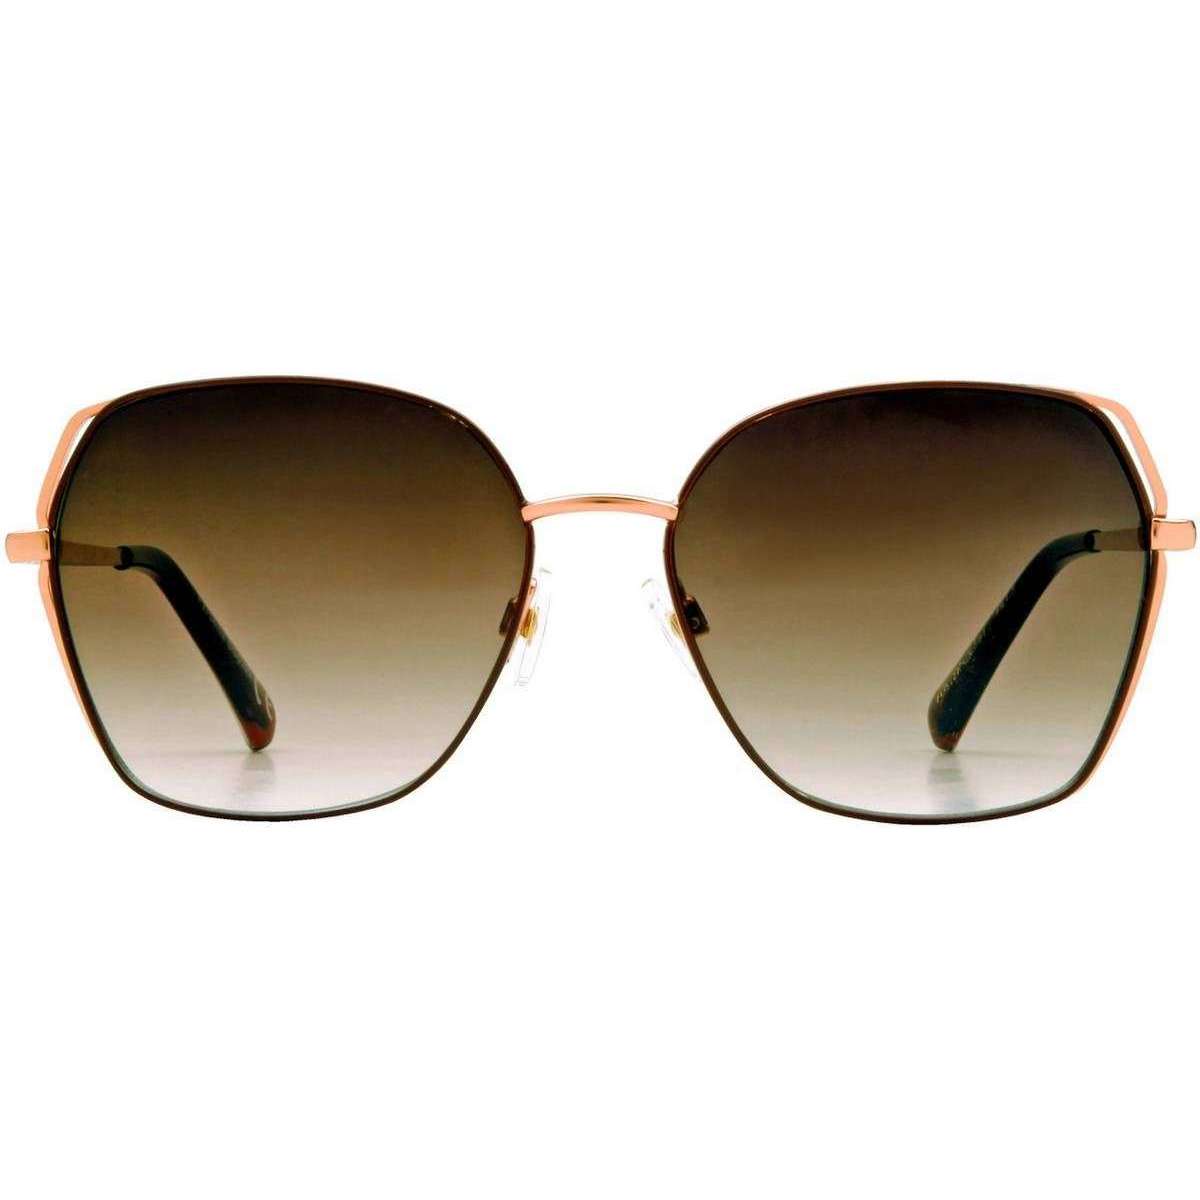 Foster Grant Women's Rose Gold Aviator Sunglasses